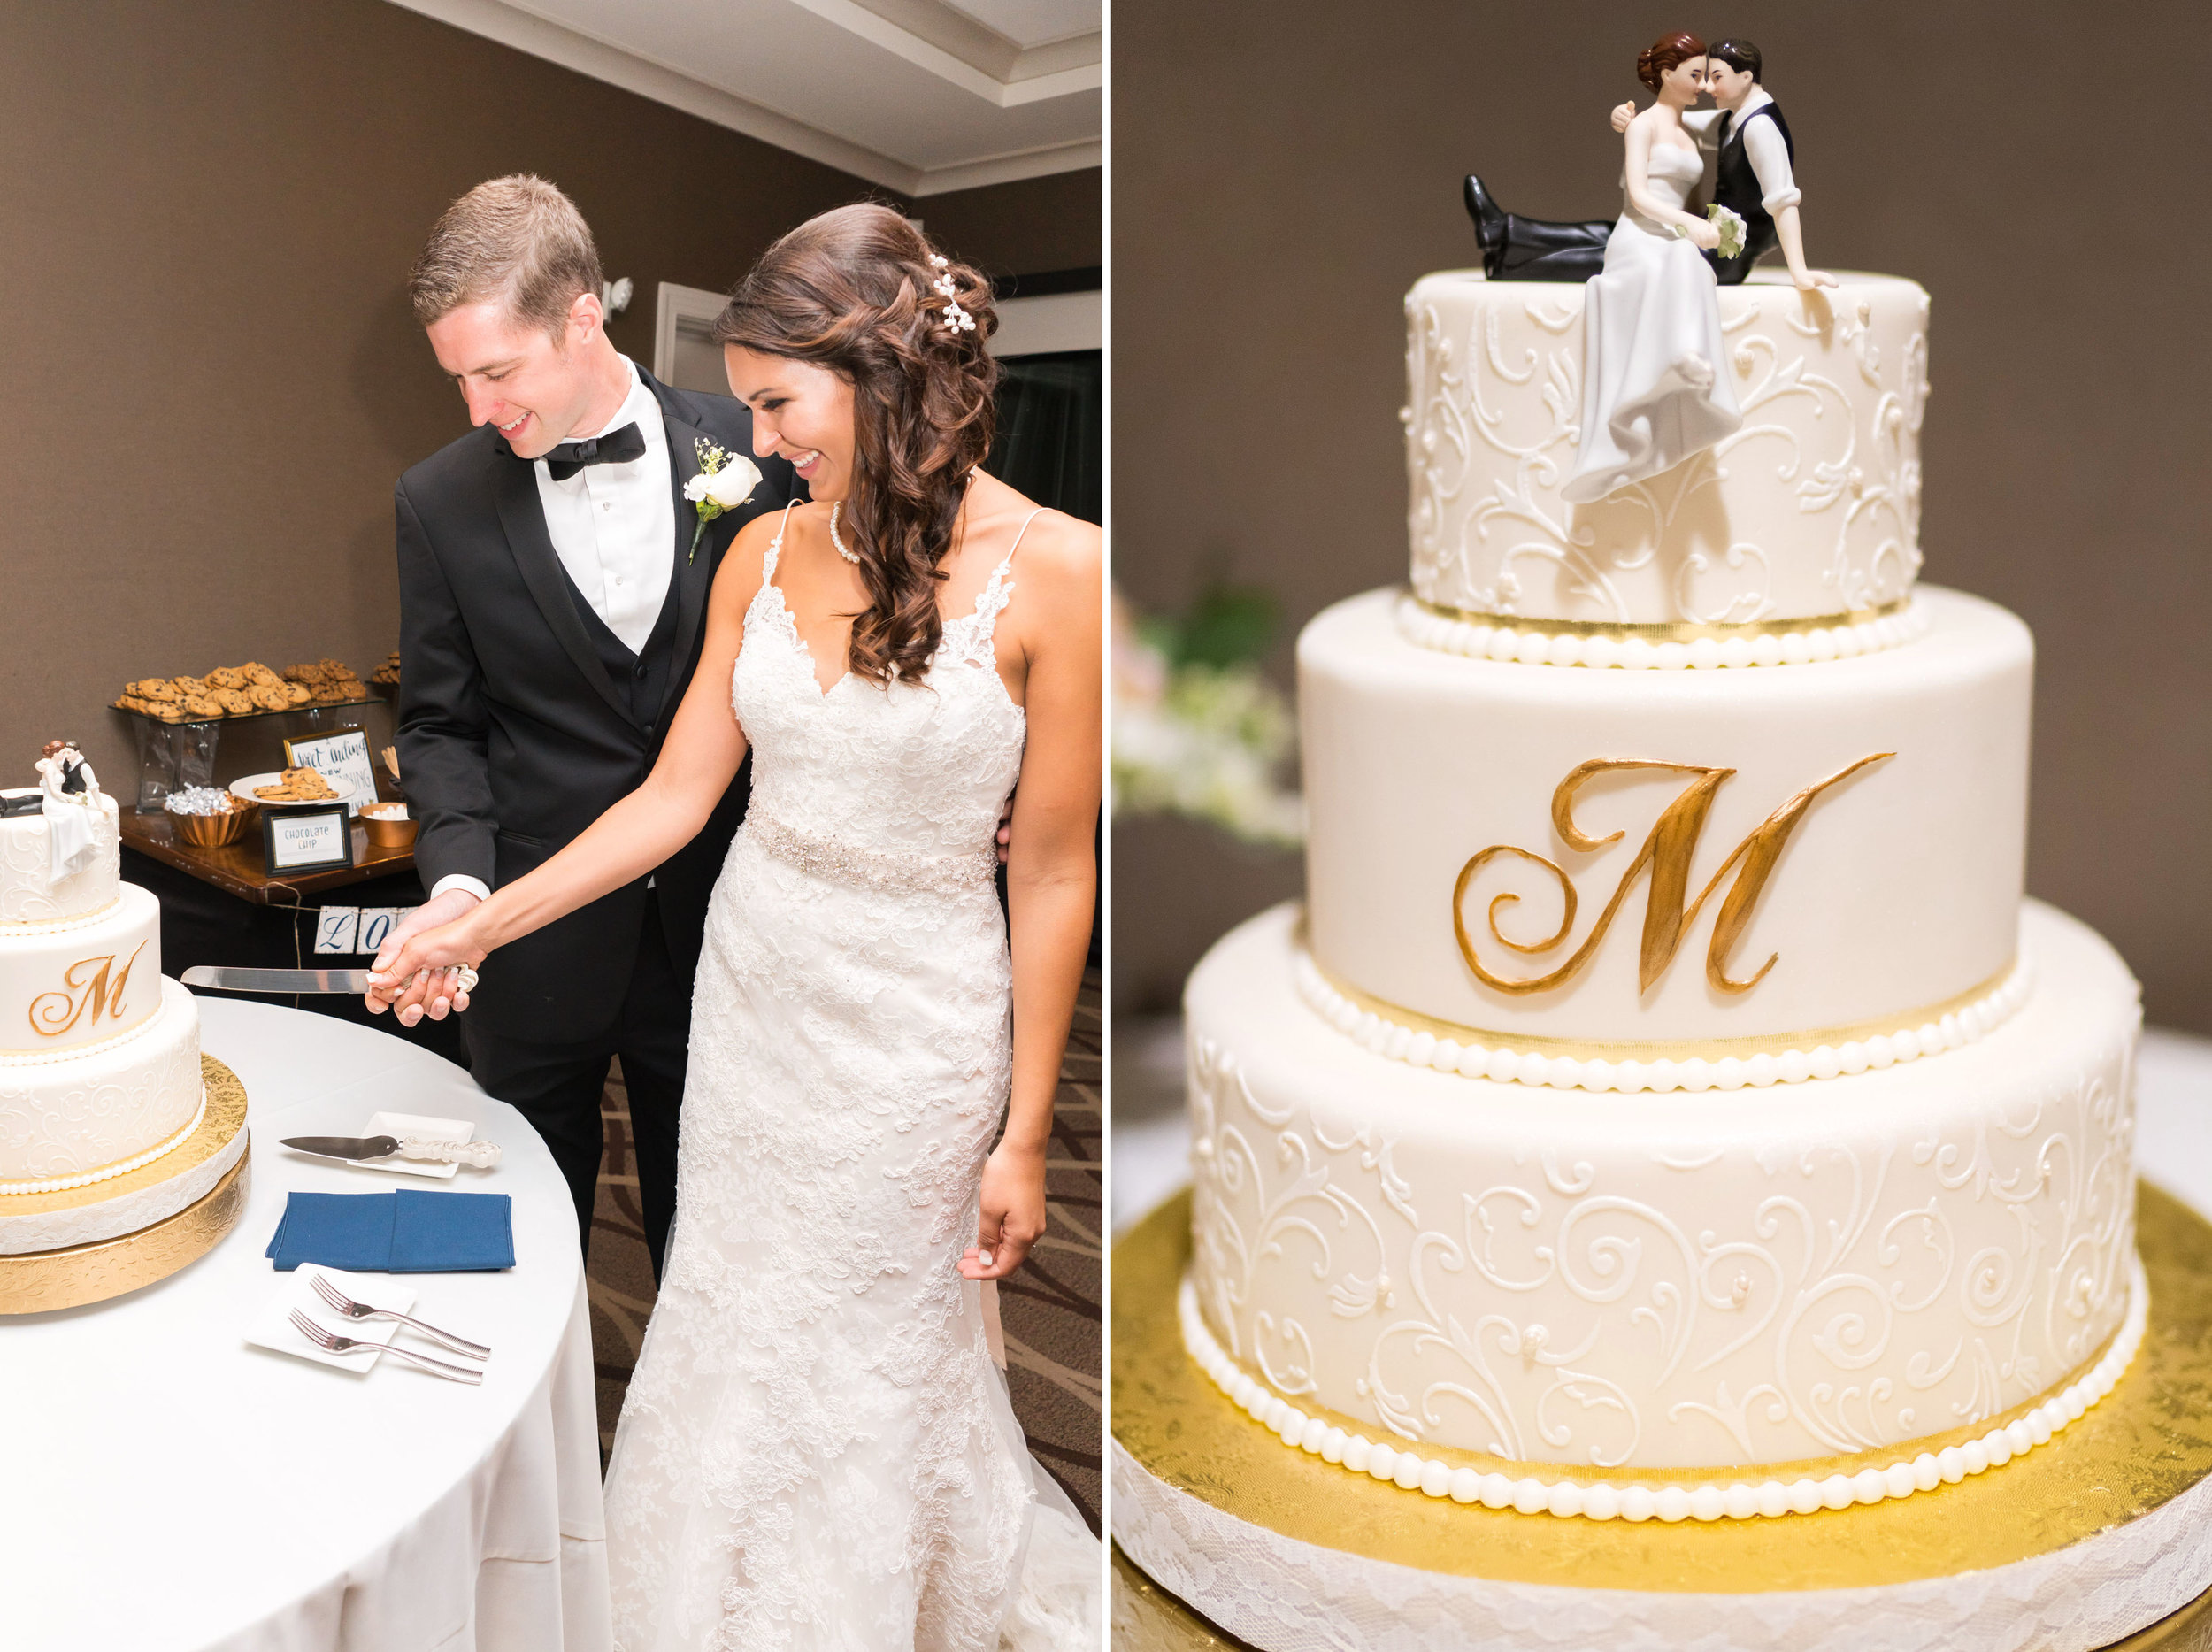 Beautiful cake cutting wedding photography in virginia 